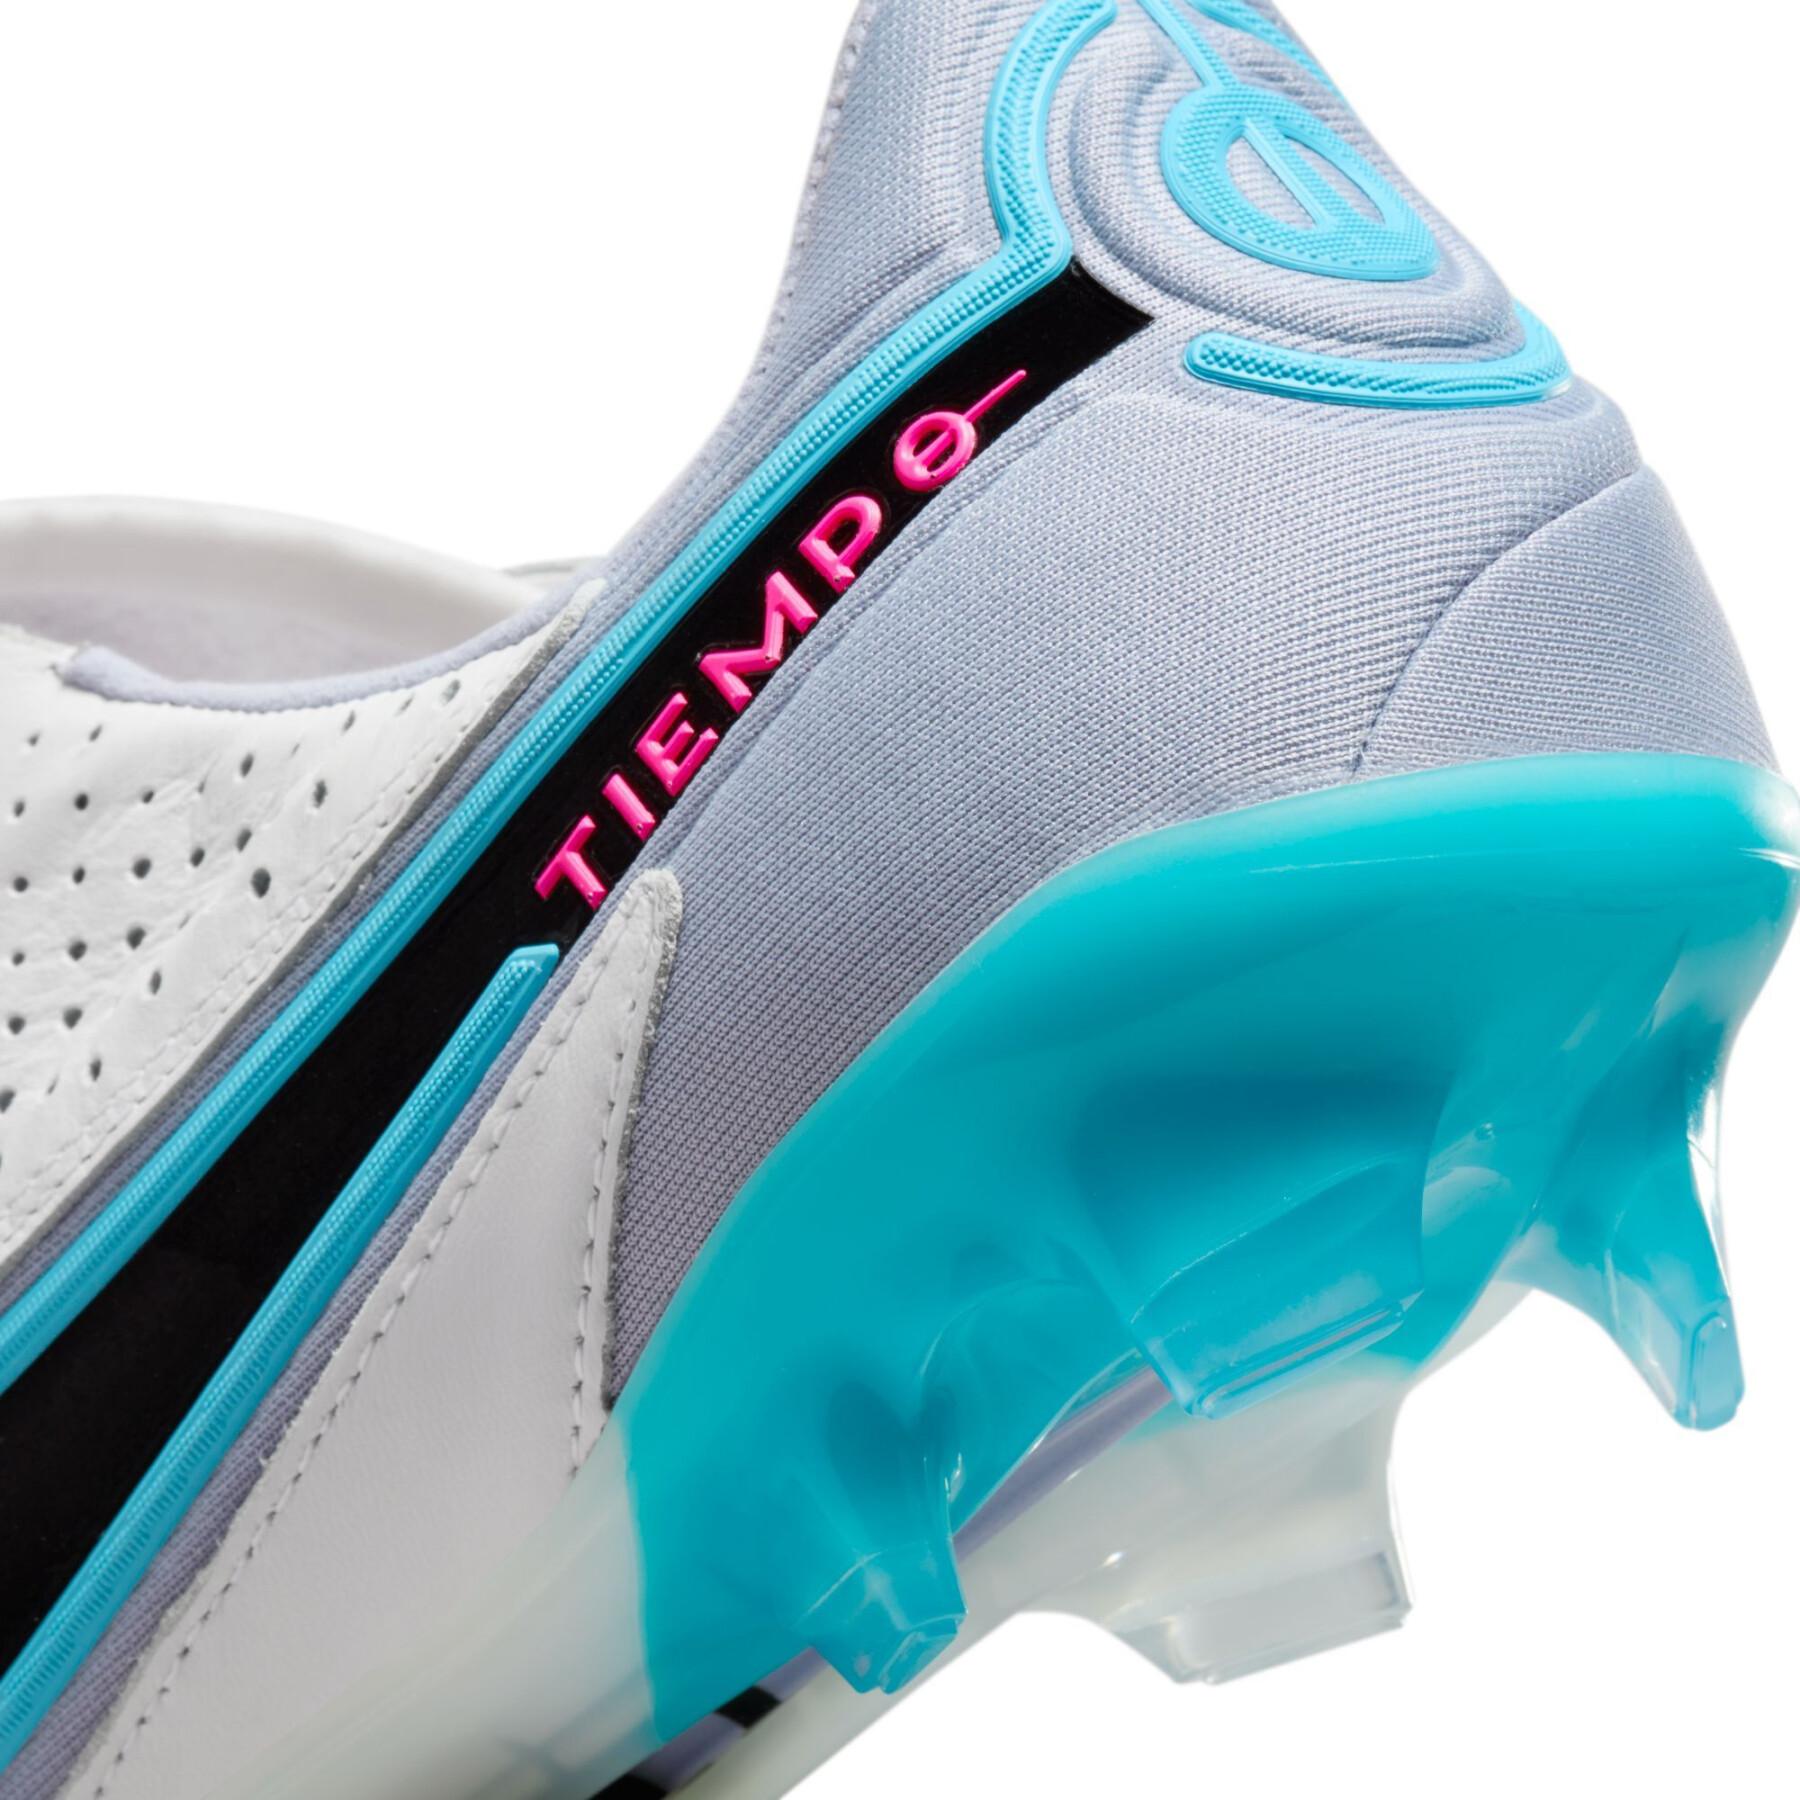 Soccer shoes Nike Tiempo Legend 9 Elite FG - Blast Pack